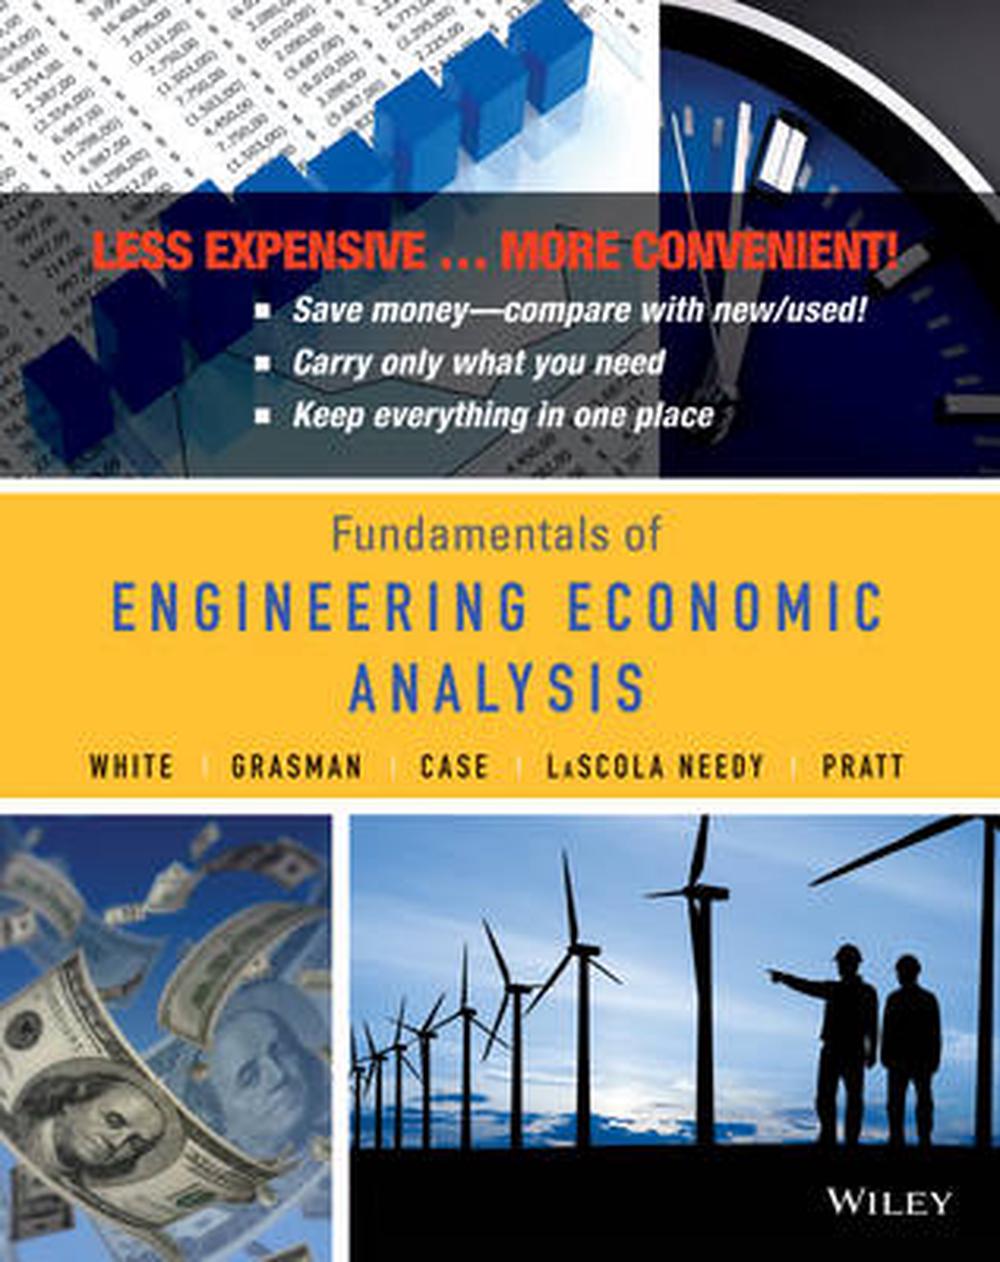 case study with engineering economics application